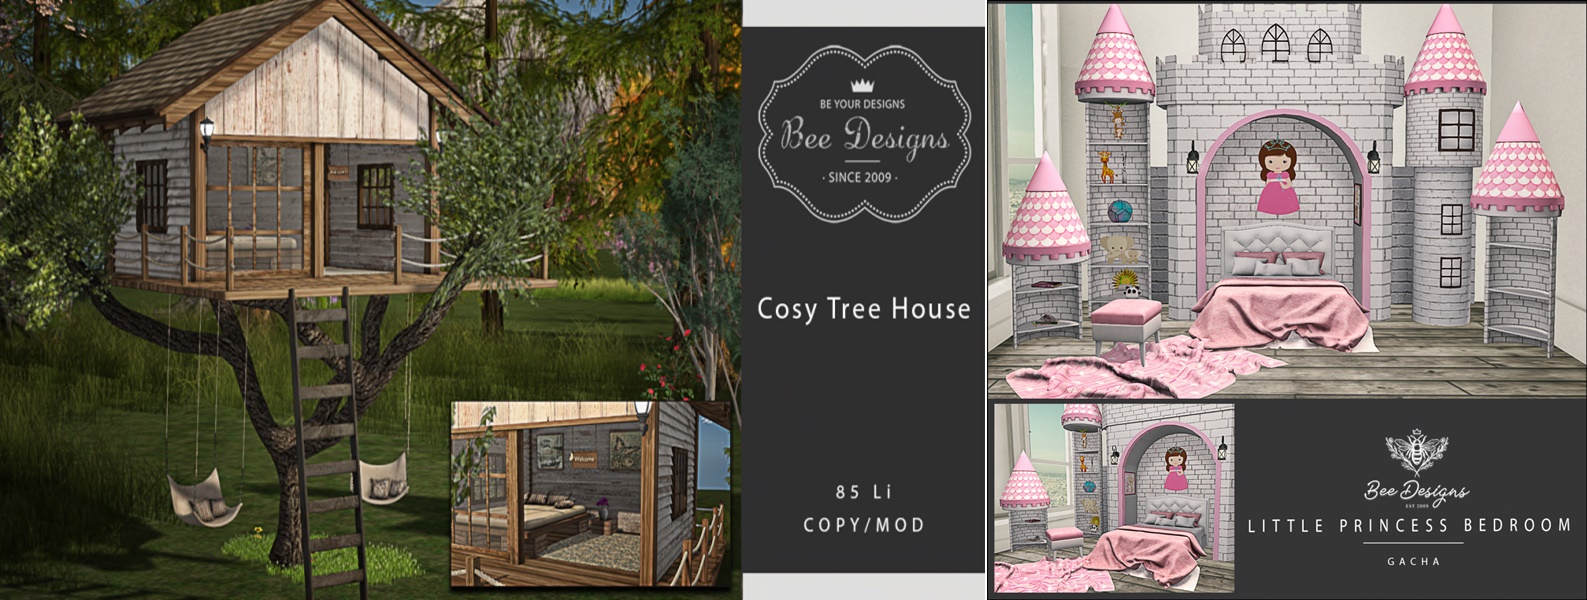 Bee Designs – Cosy Tree House & Little Princess Bedroom